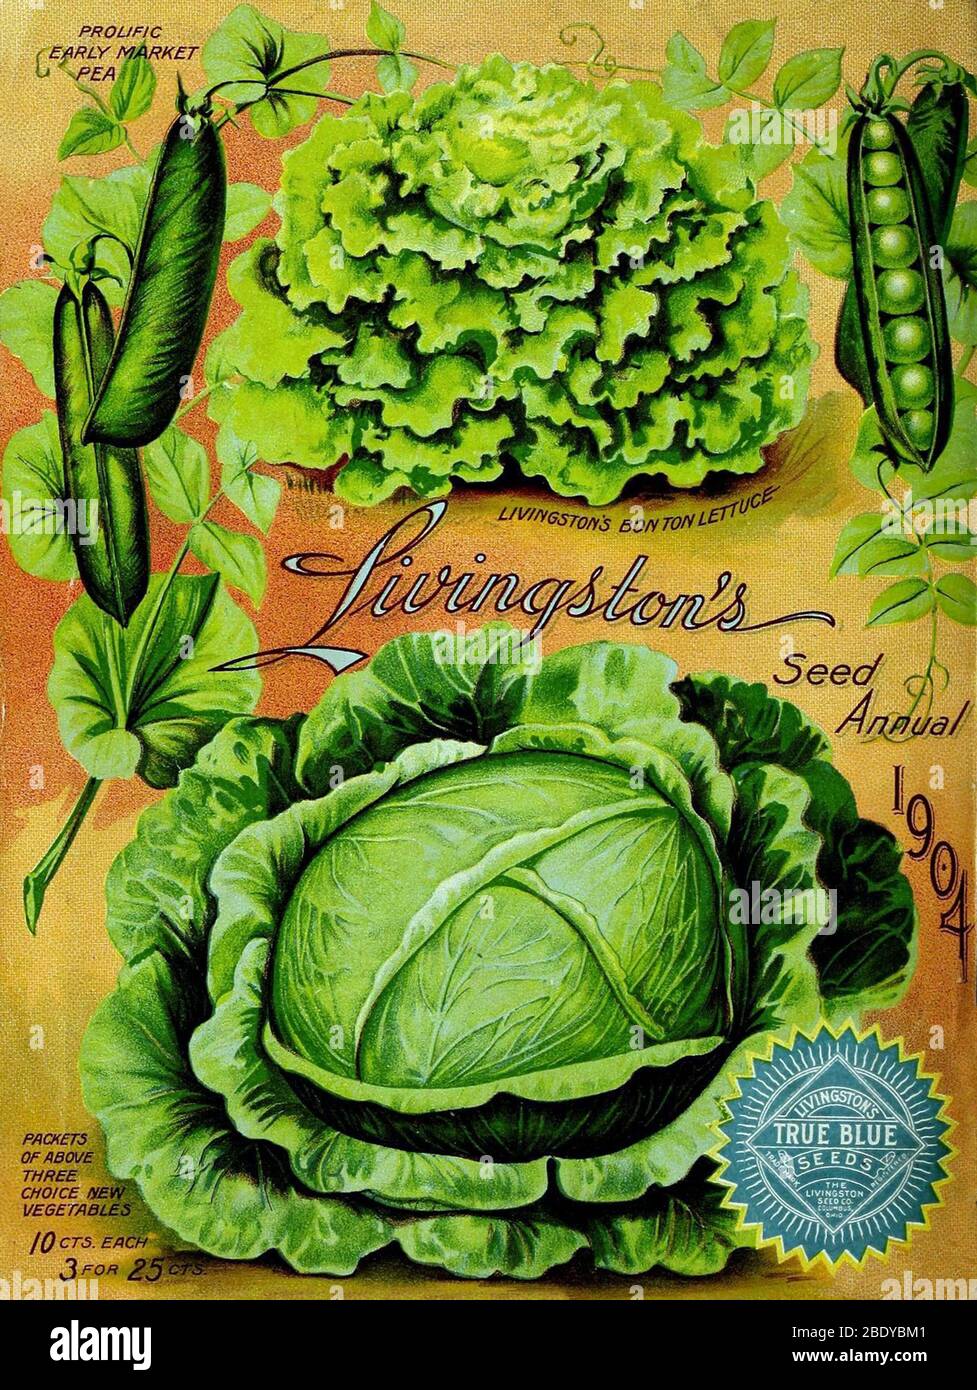 Vegetables, Livingston Seed Co., 1904 Stock Photo